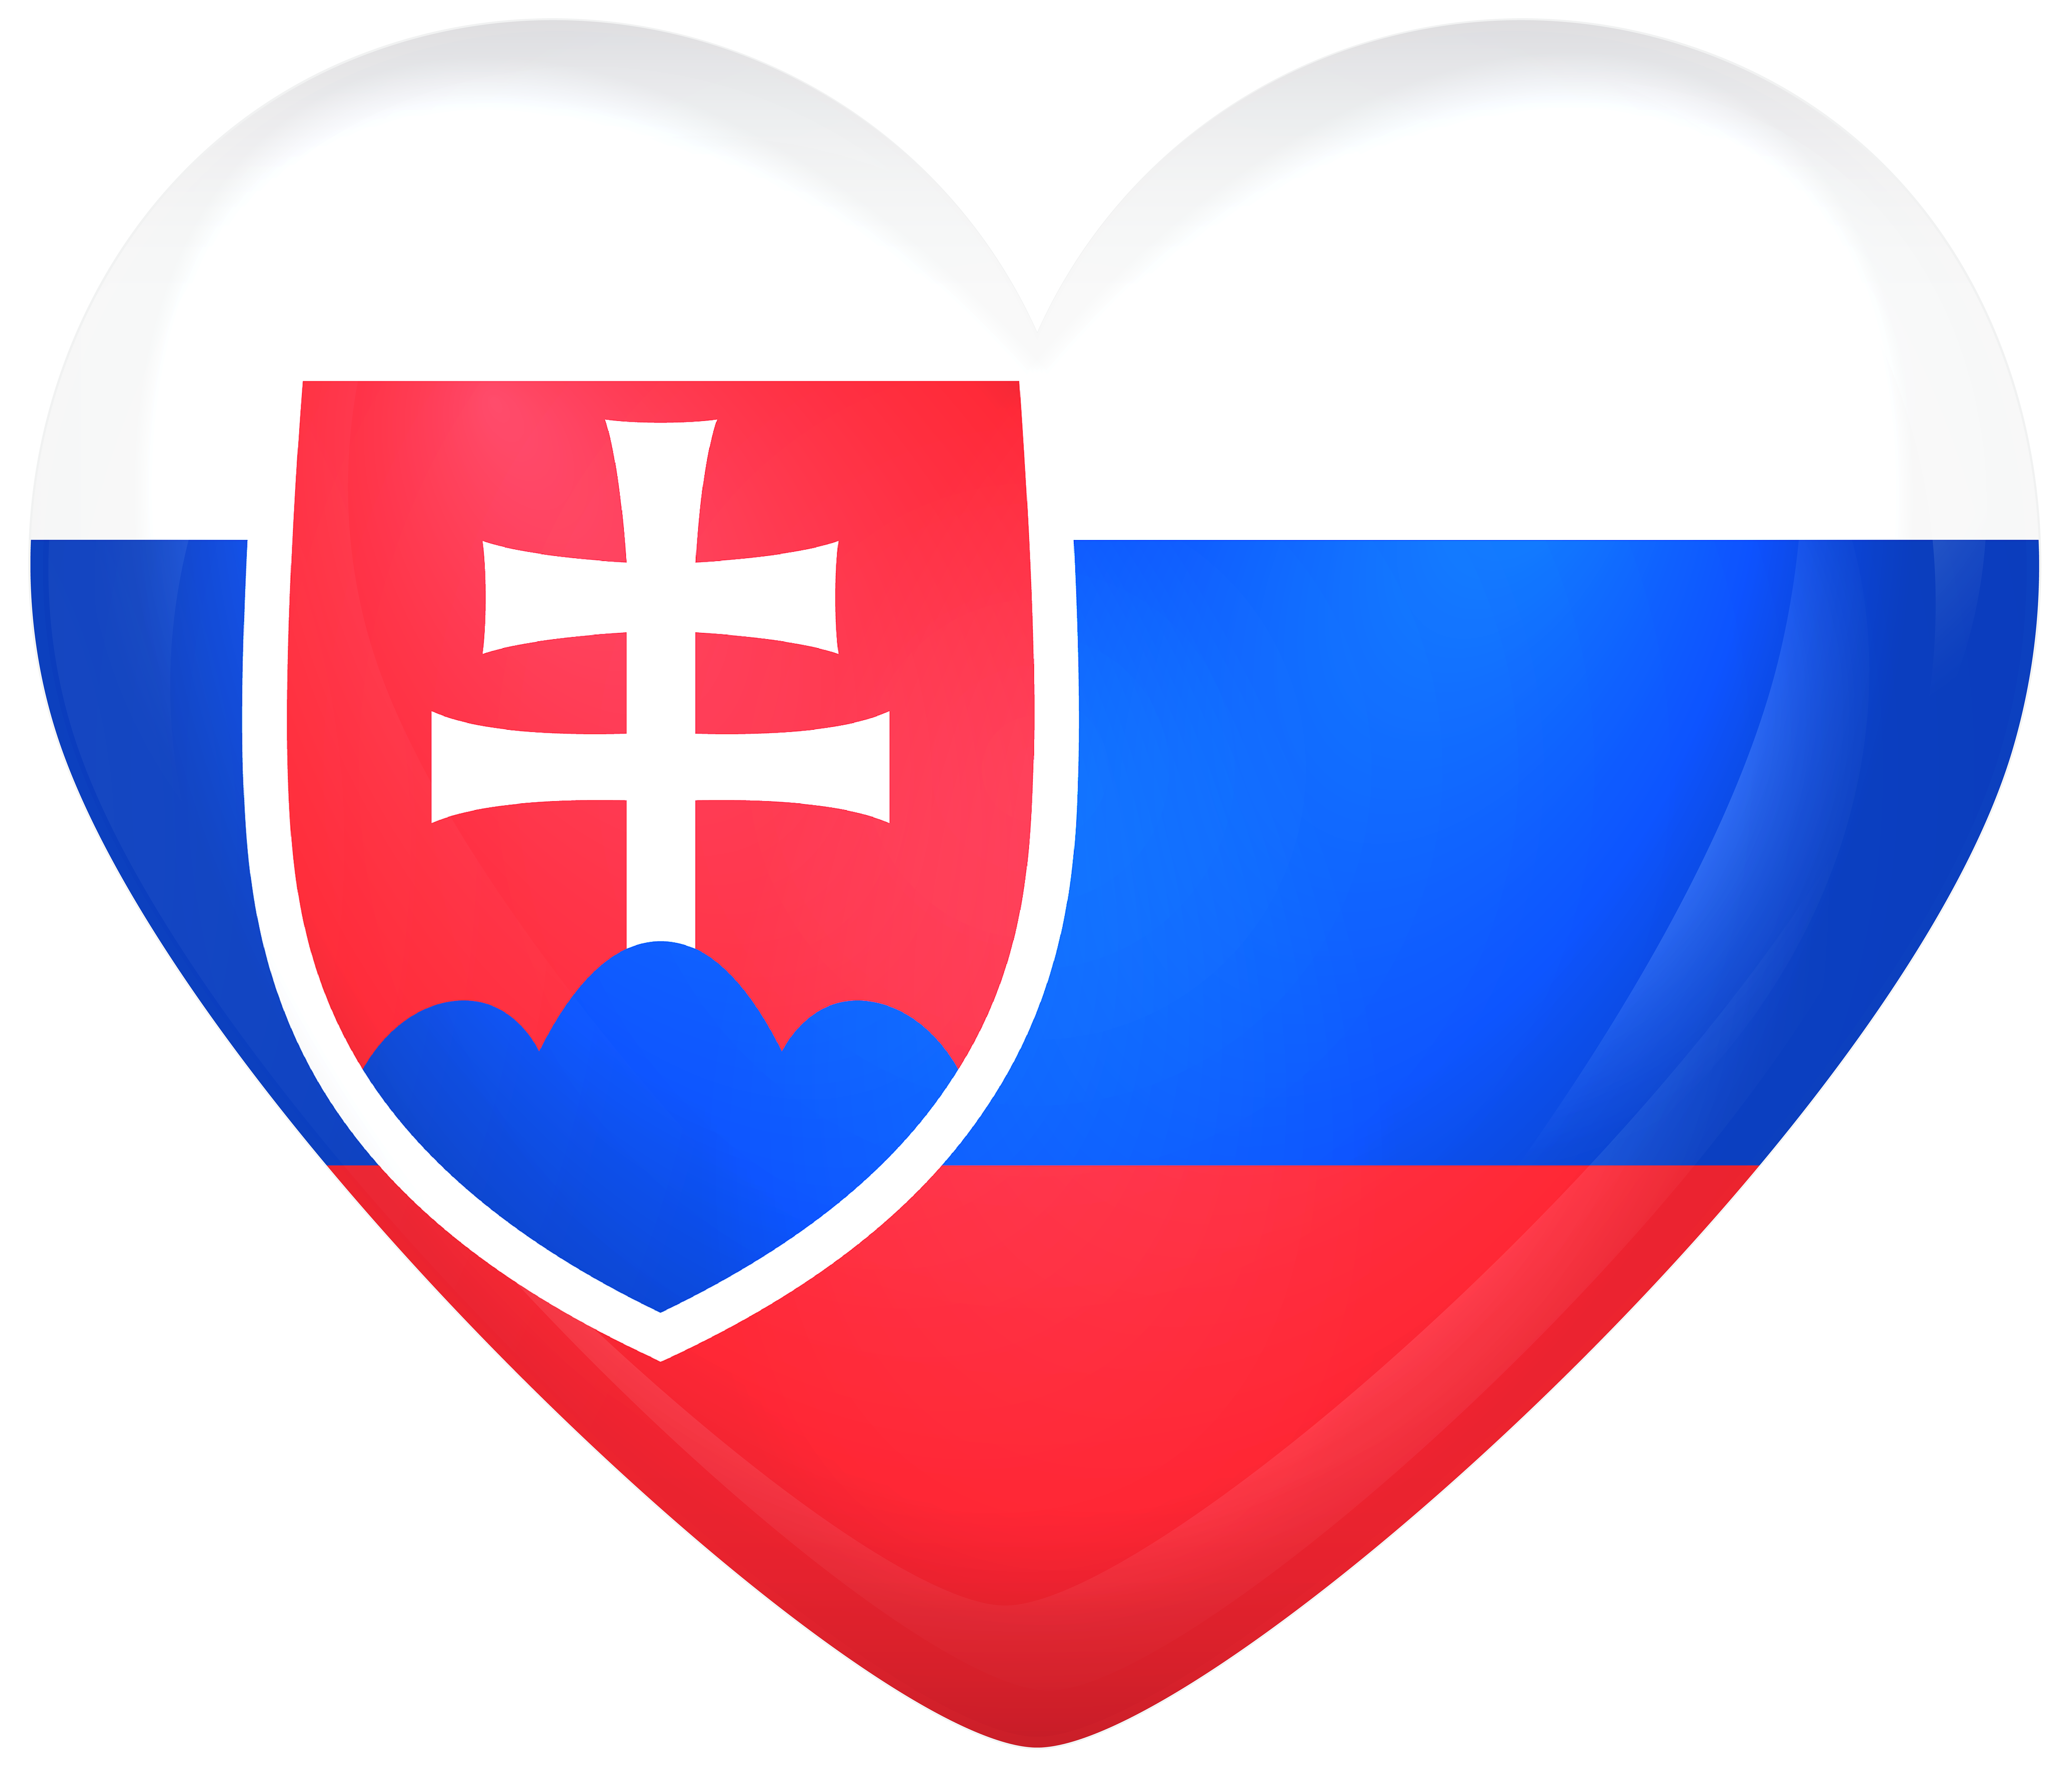 Slovakia Large Heart Flag | Gallery Yopriceville - High ...